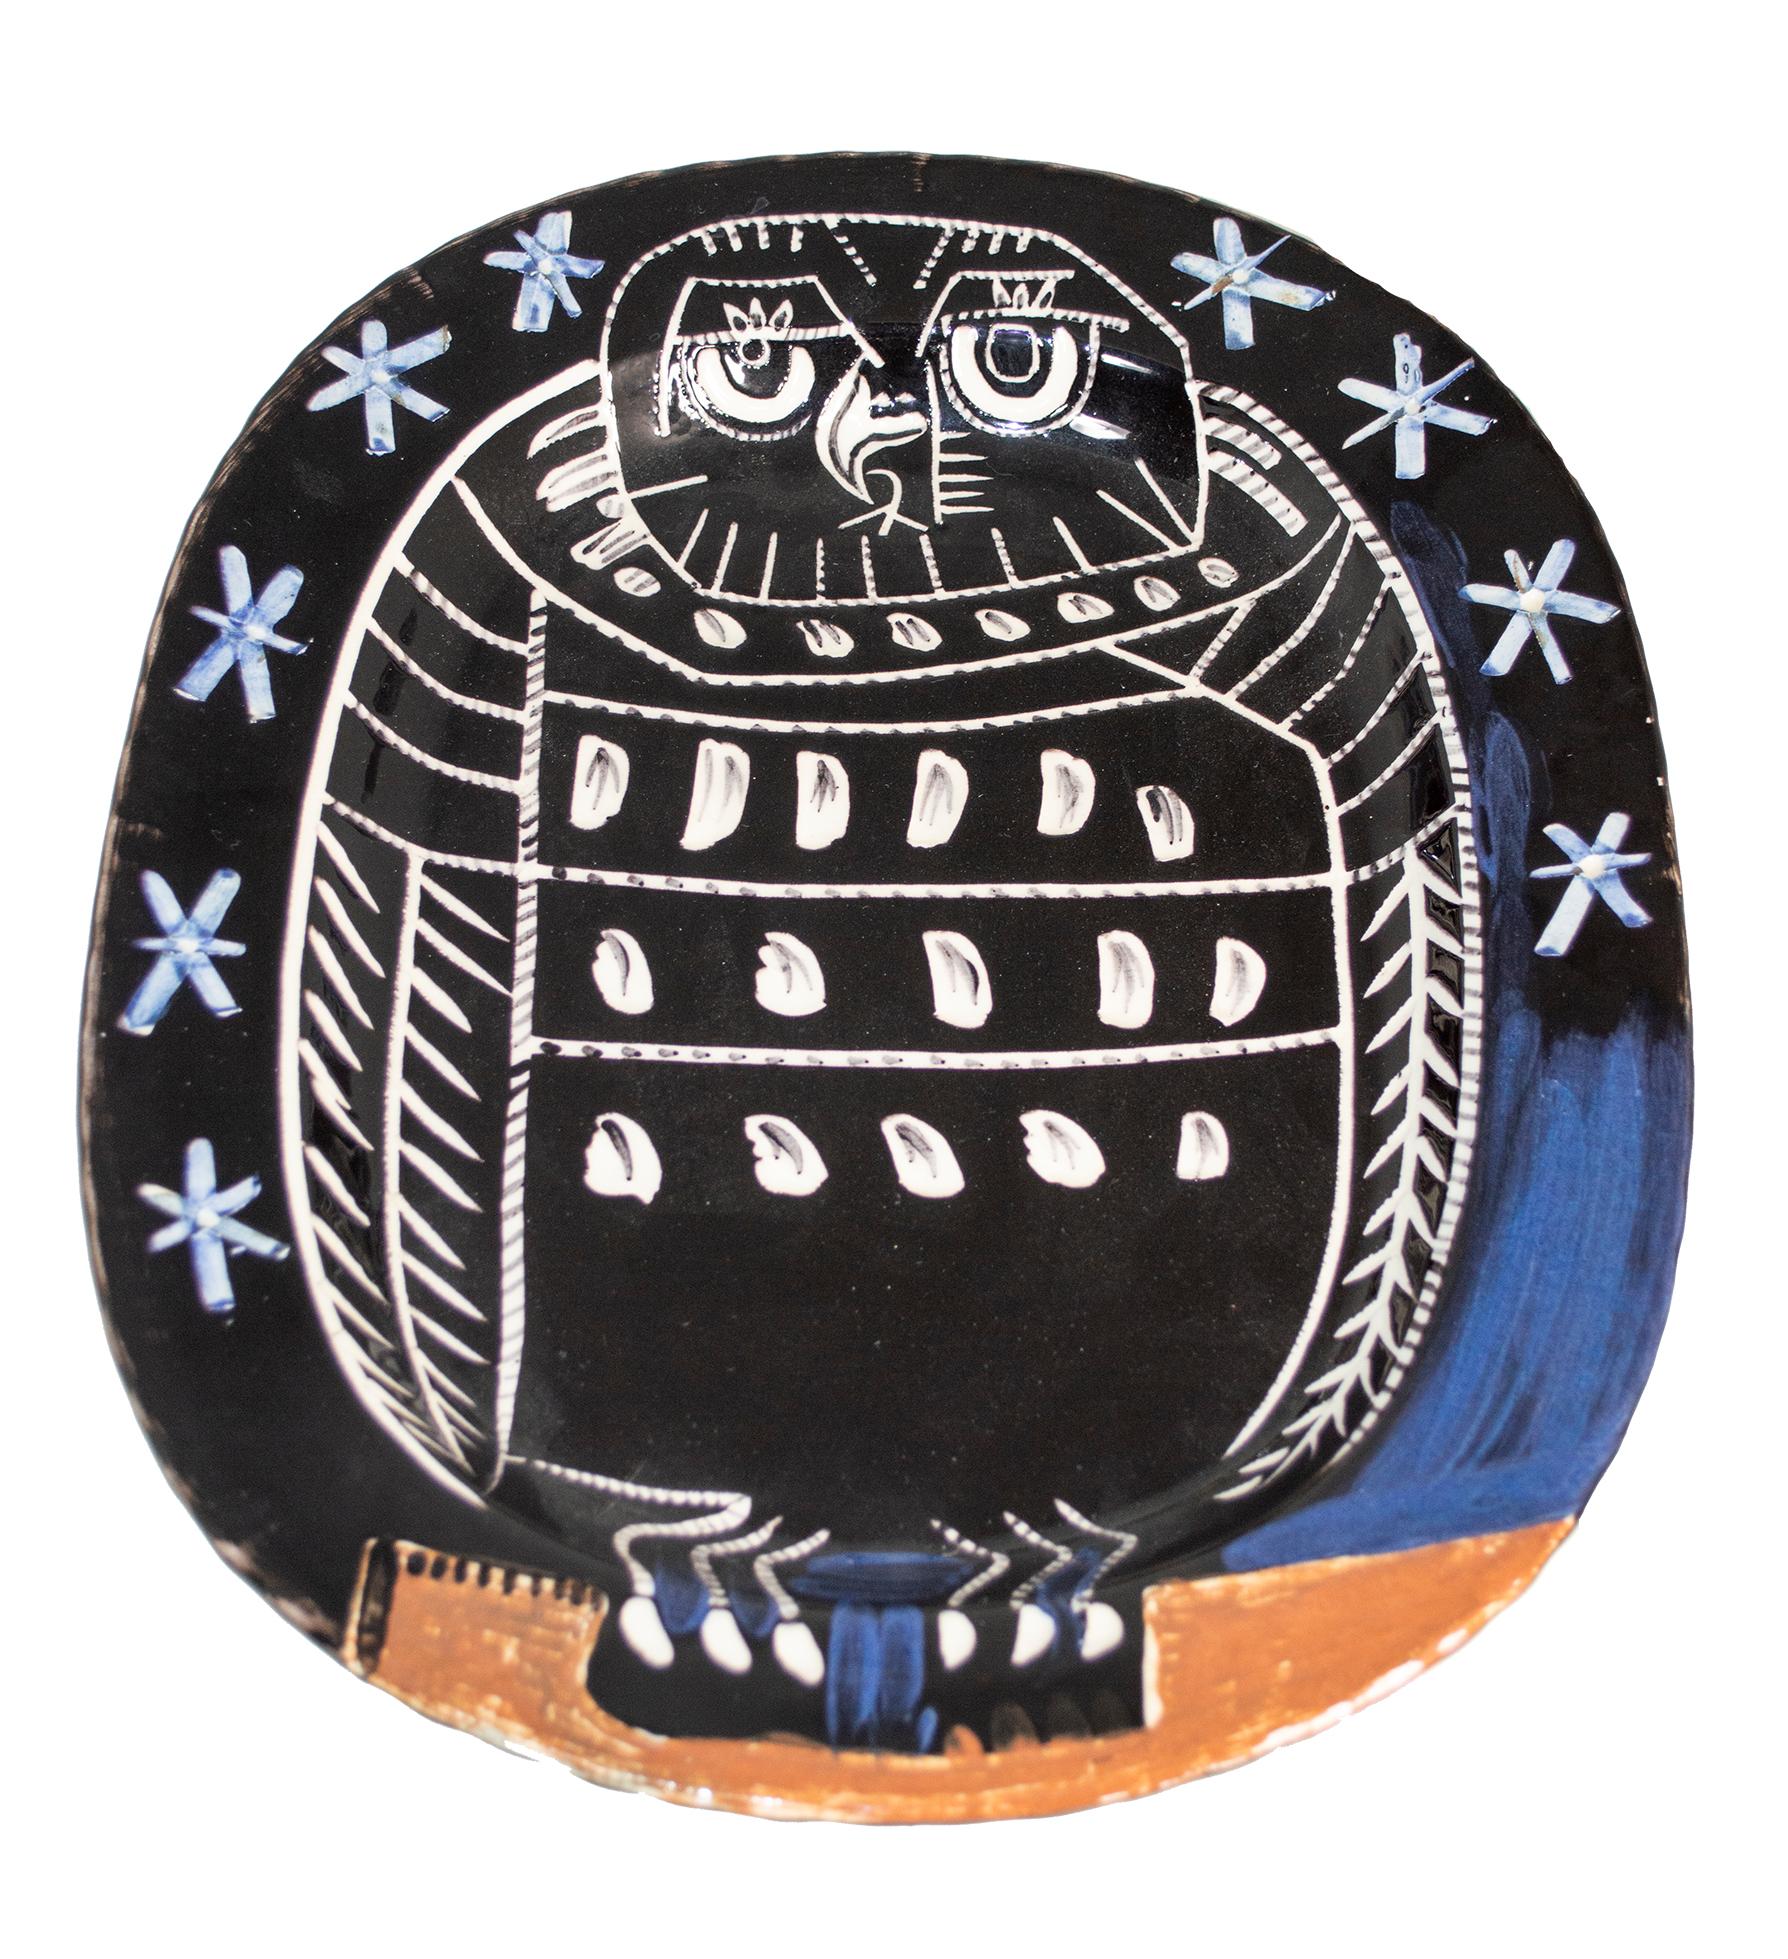 Originale rechteckige Madoura-Keramik-Platte „Bright Owl“ aus Madoura, Edition Picasso (Kubismus), Art, von Pablo Picasso